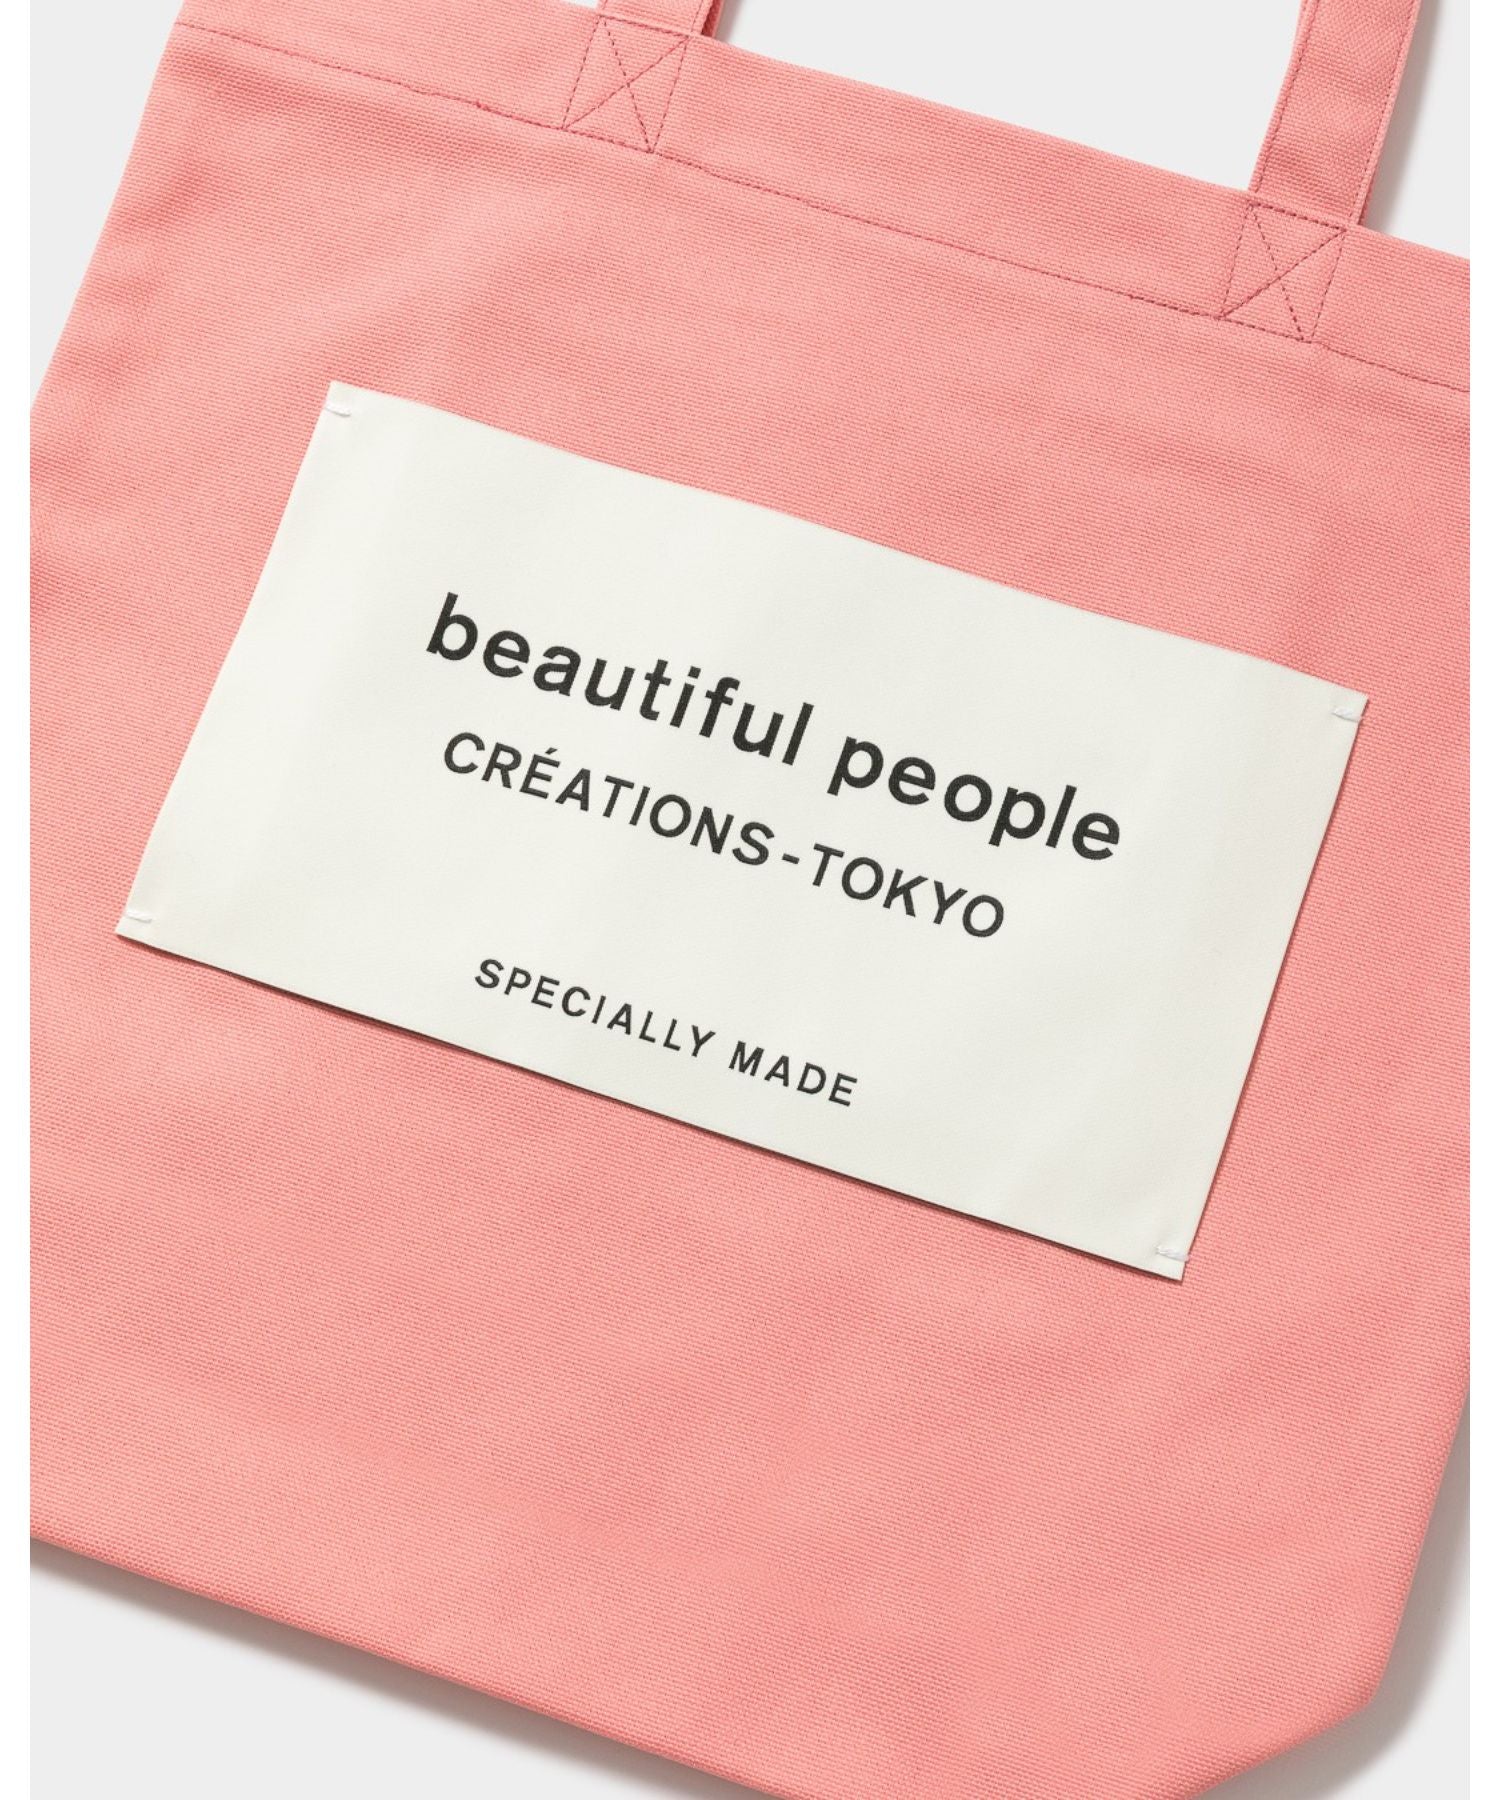 【Limited Color】SDGs name tag tote bag